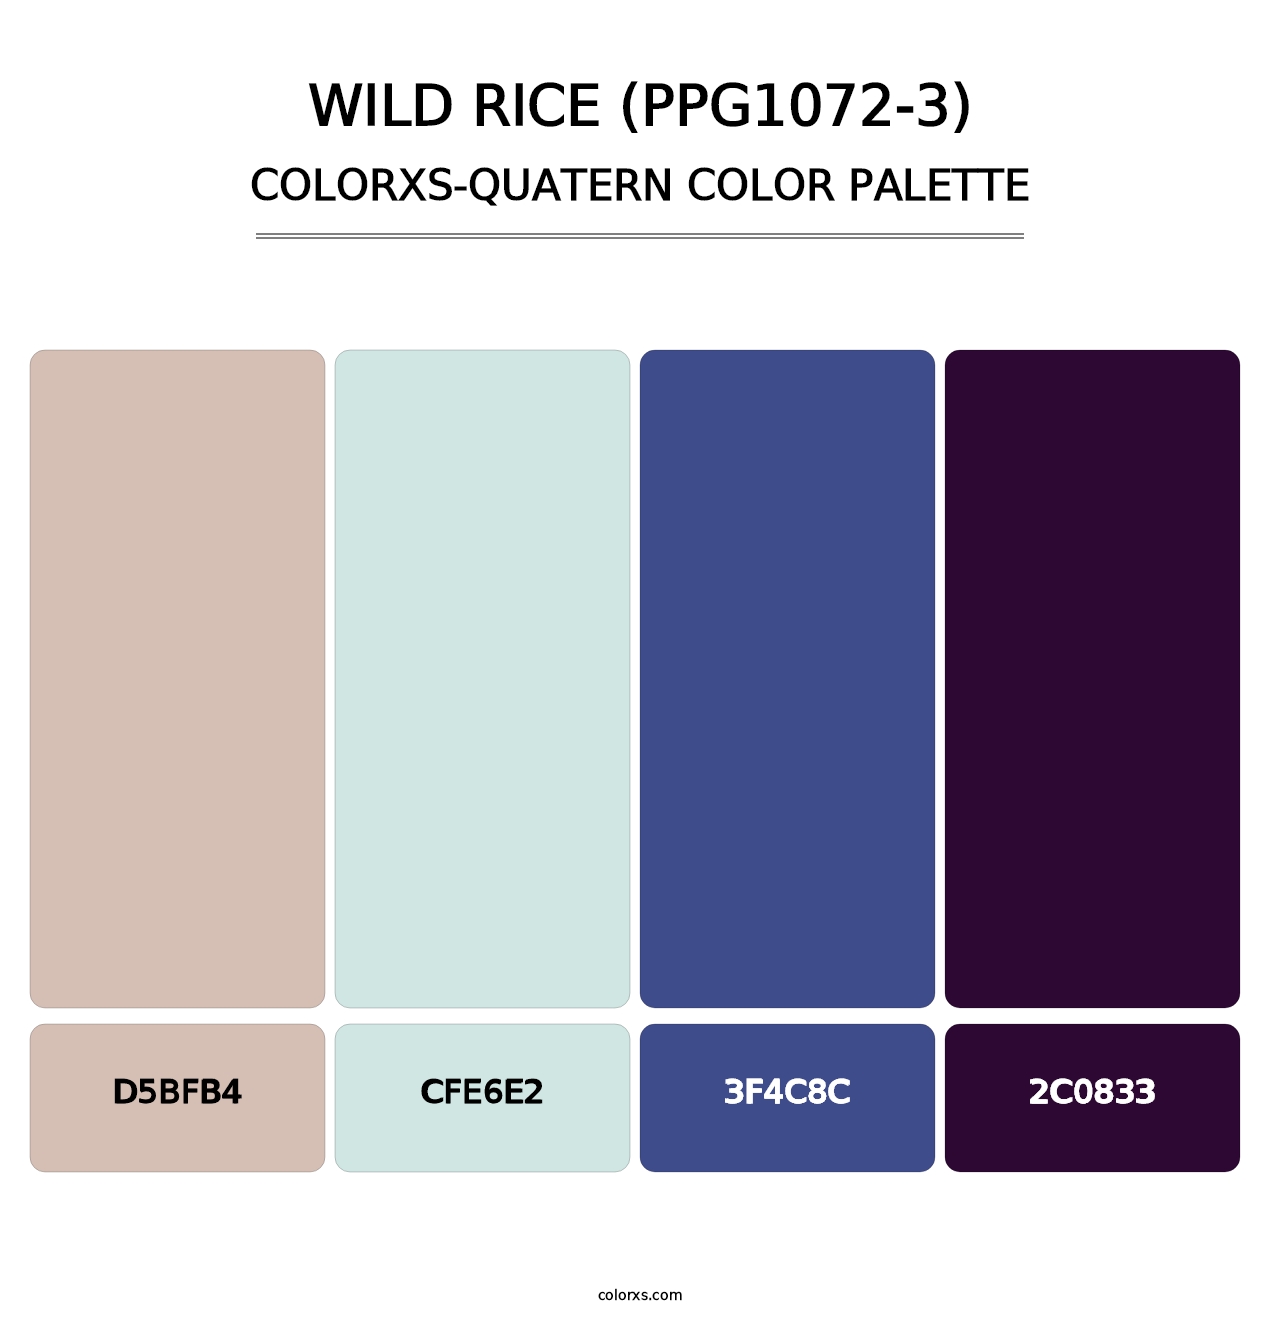 Wild Rice (PPG1072-3) - Colorxs Quatern Palette